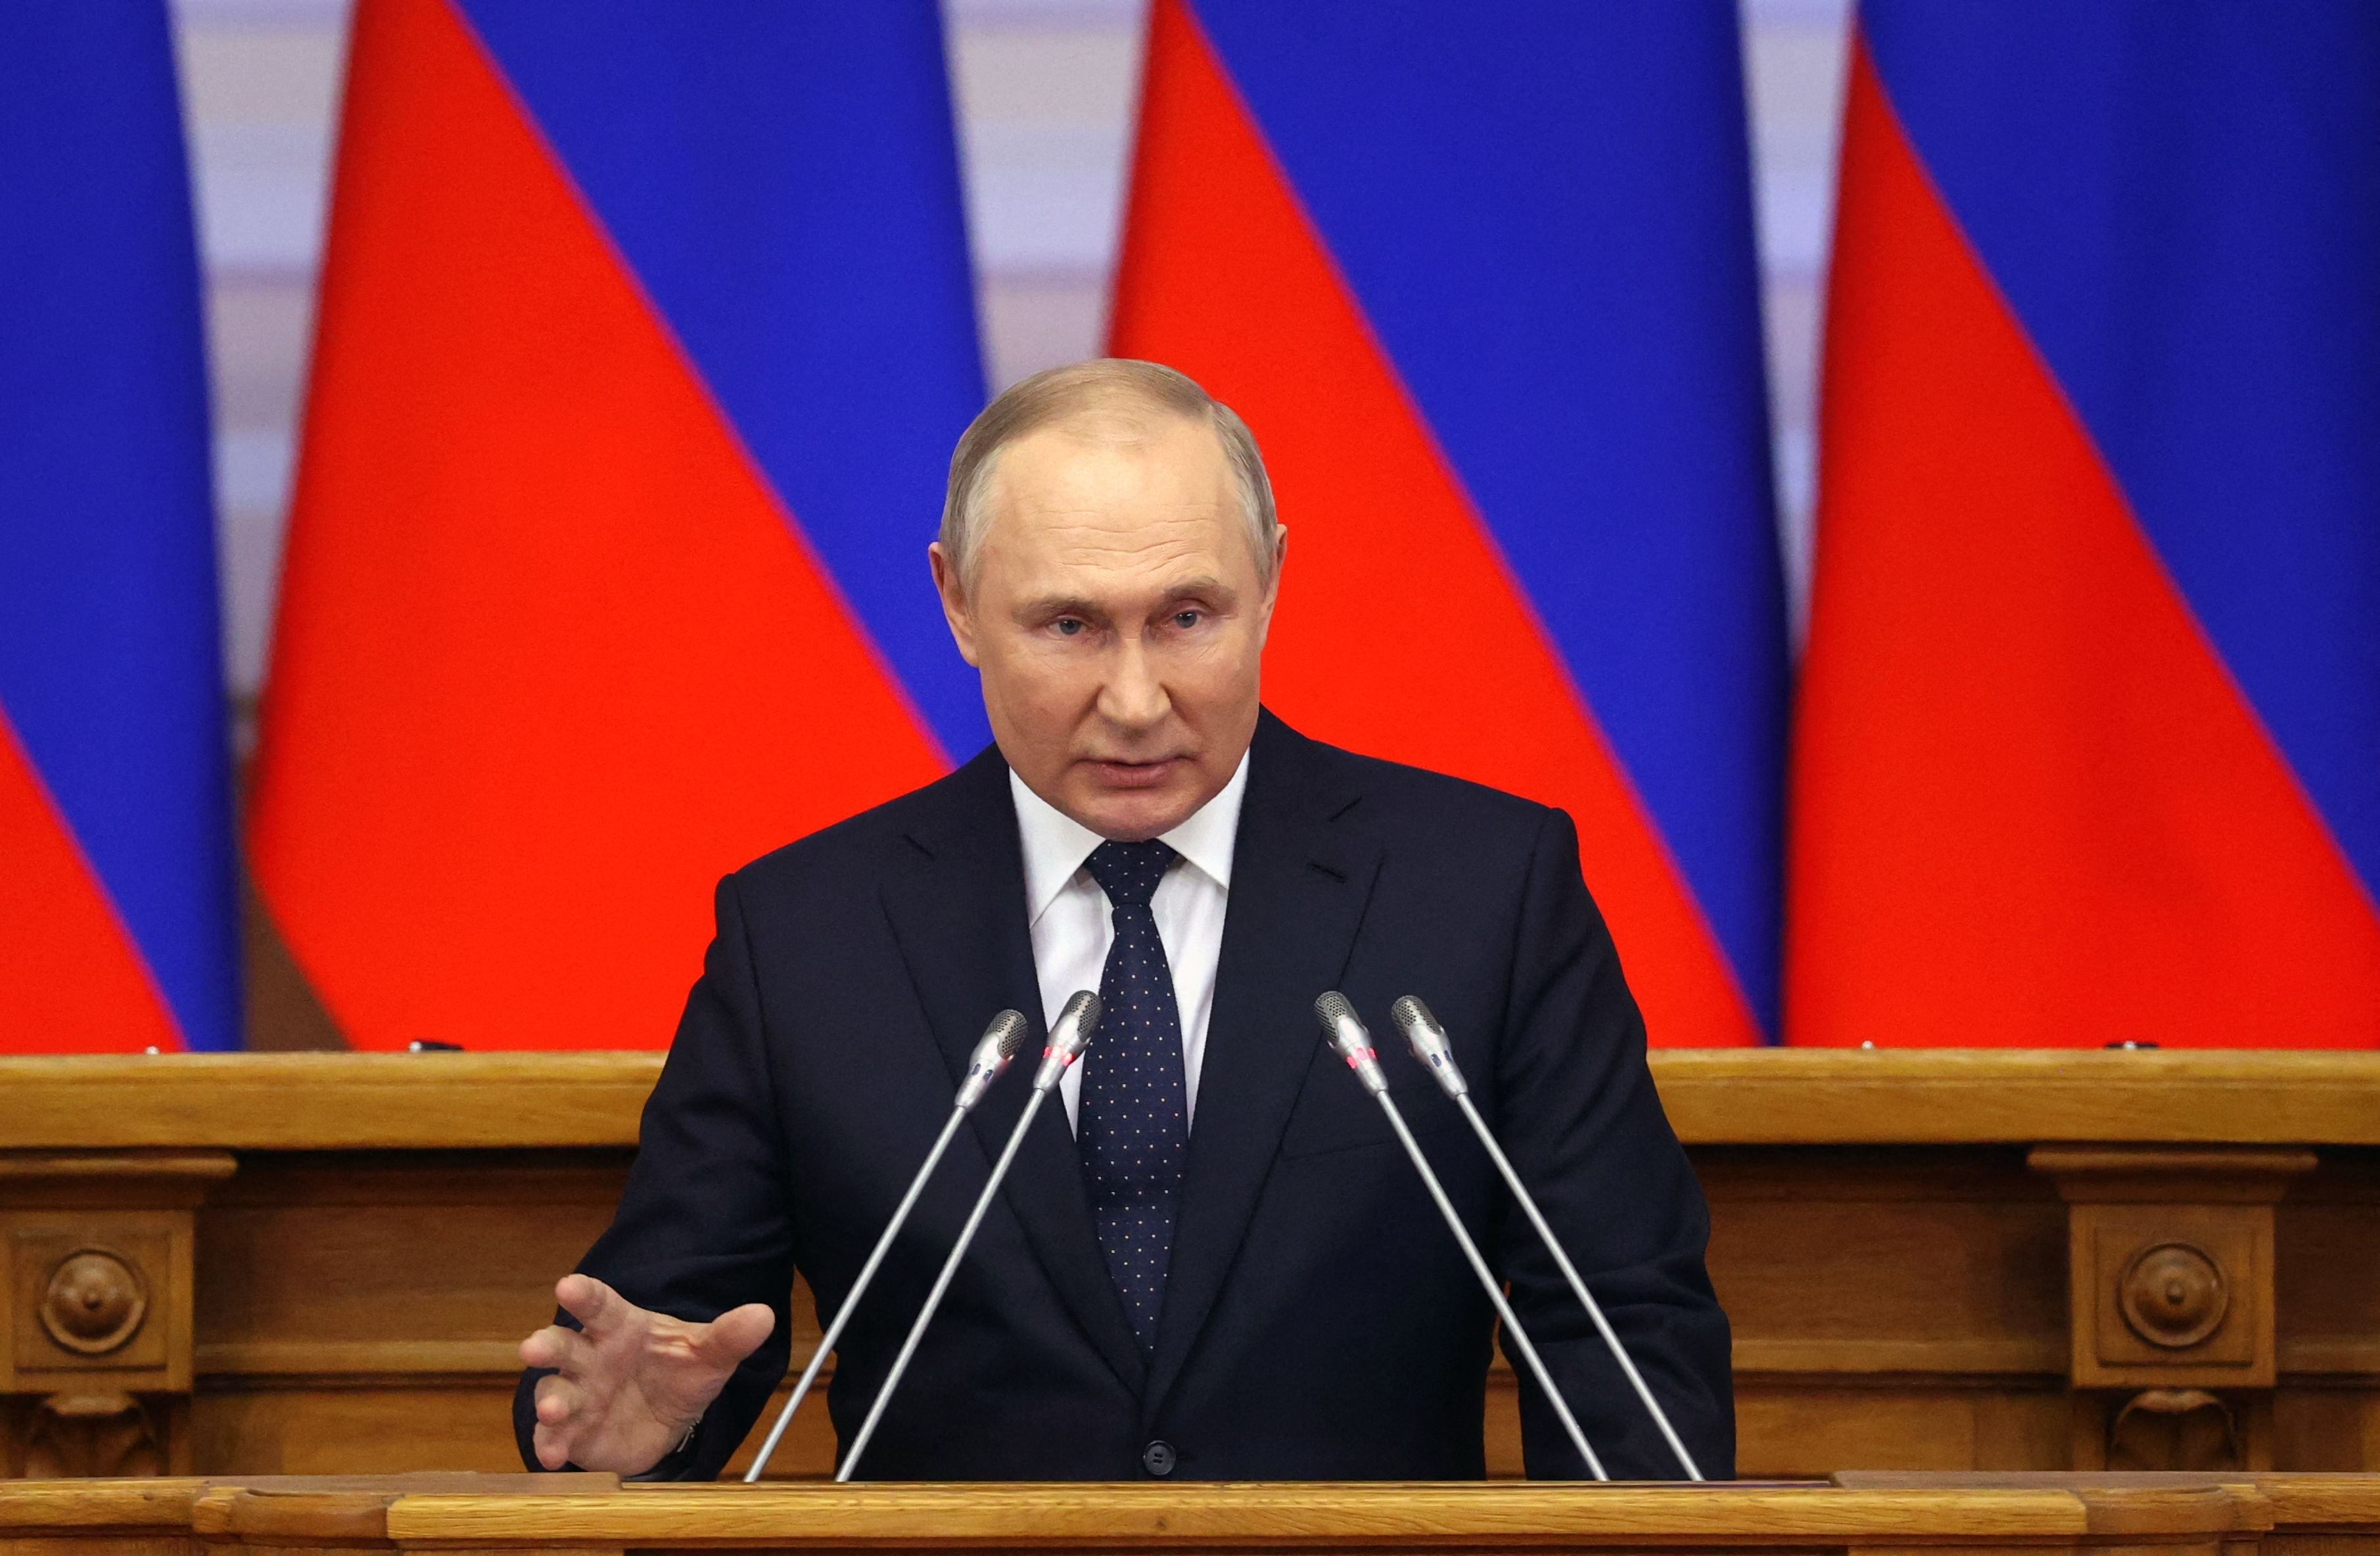 Concerns around Vladimir Putin’s health have been mounting